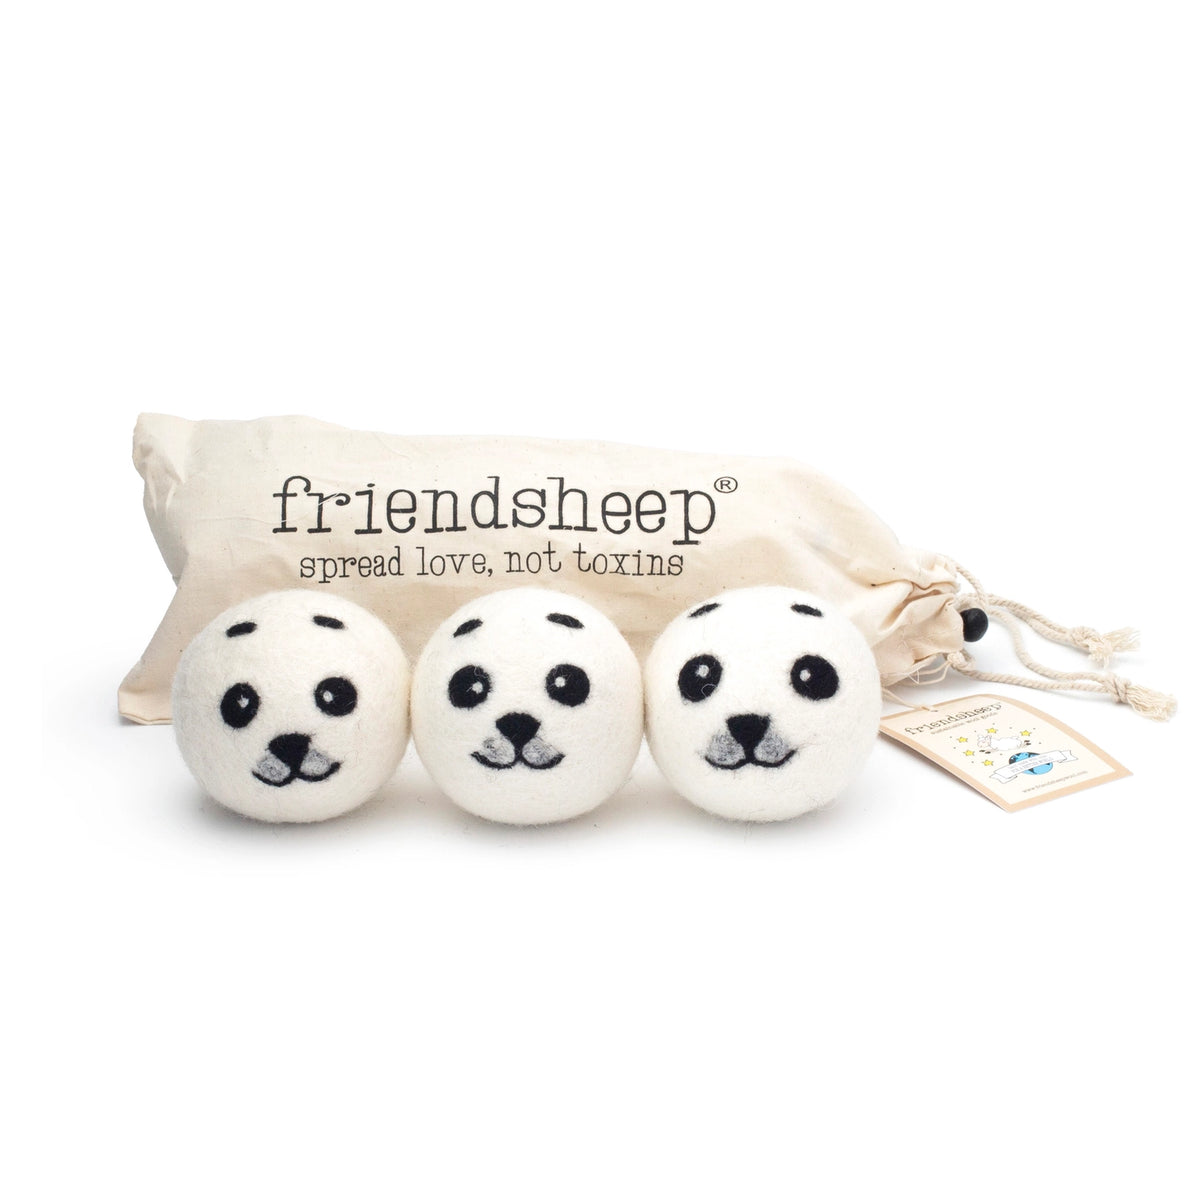 Friendsheep - Eco Dryer Ball Baby Seals (Set of 3)